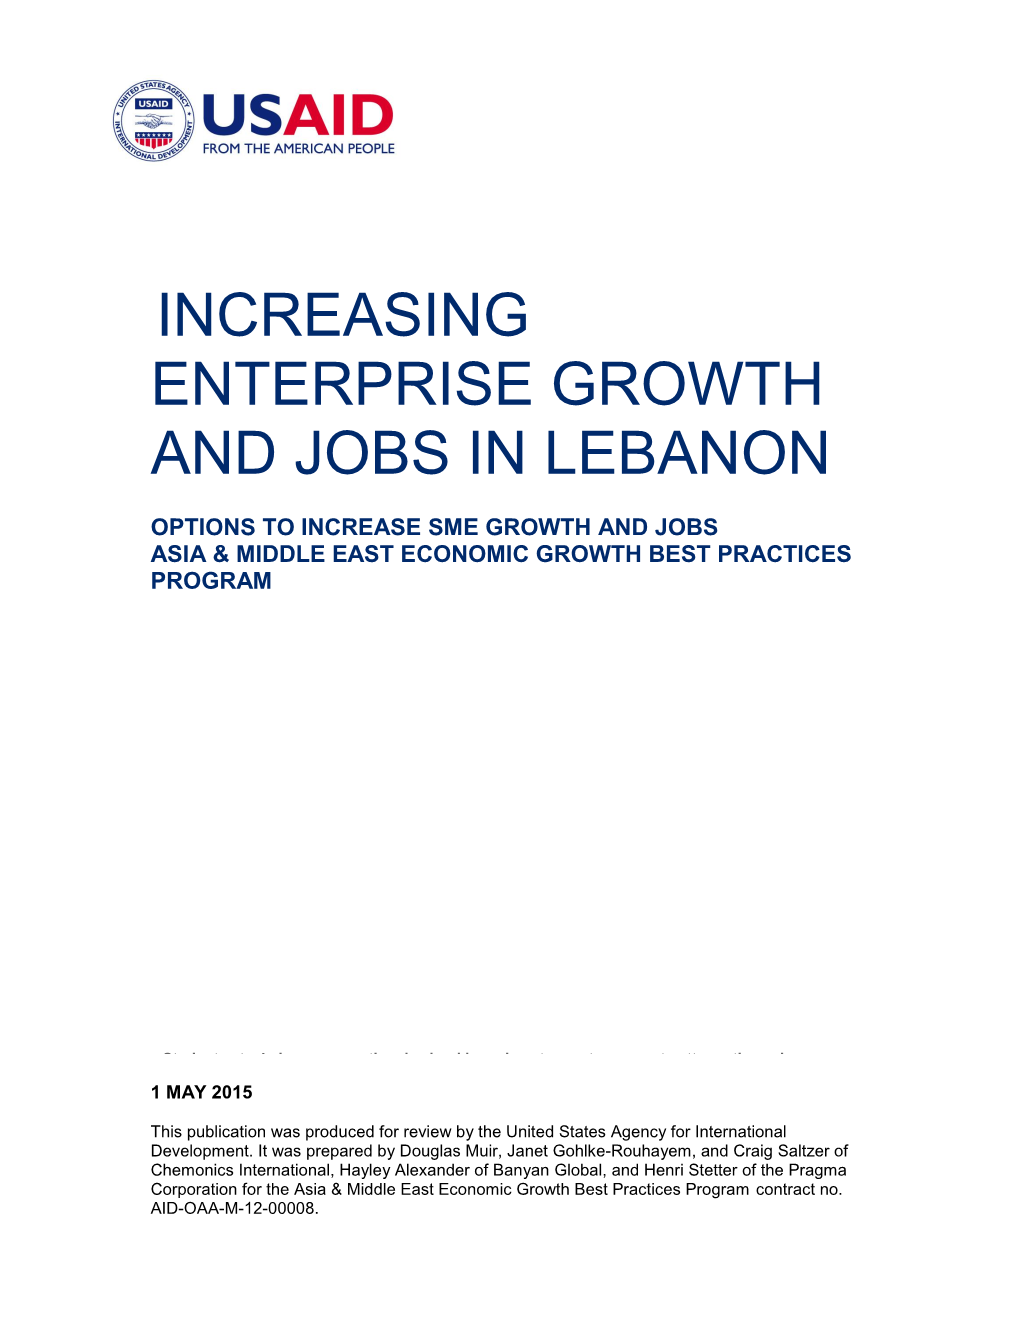 Increasing Enterprise Growth and Jobs in Lebanon